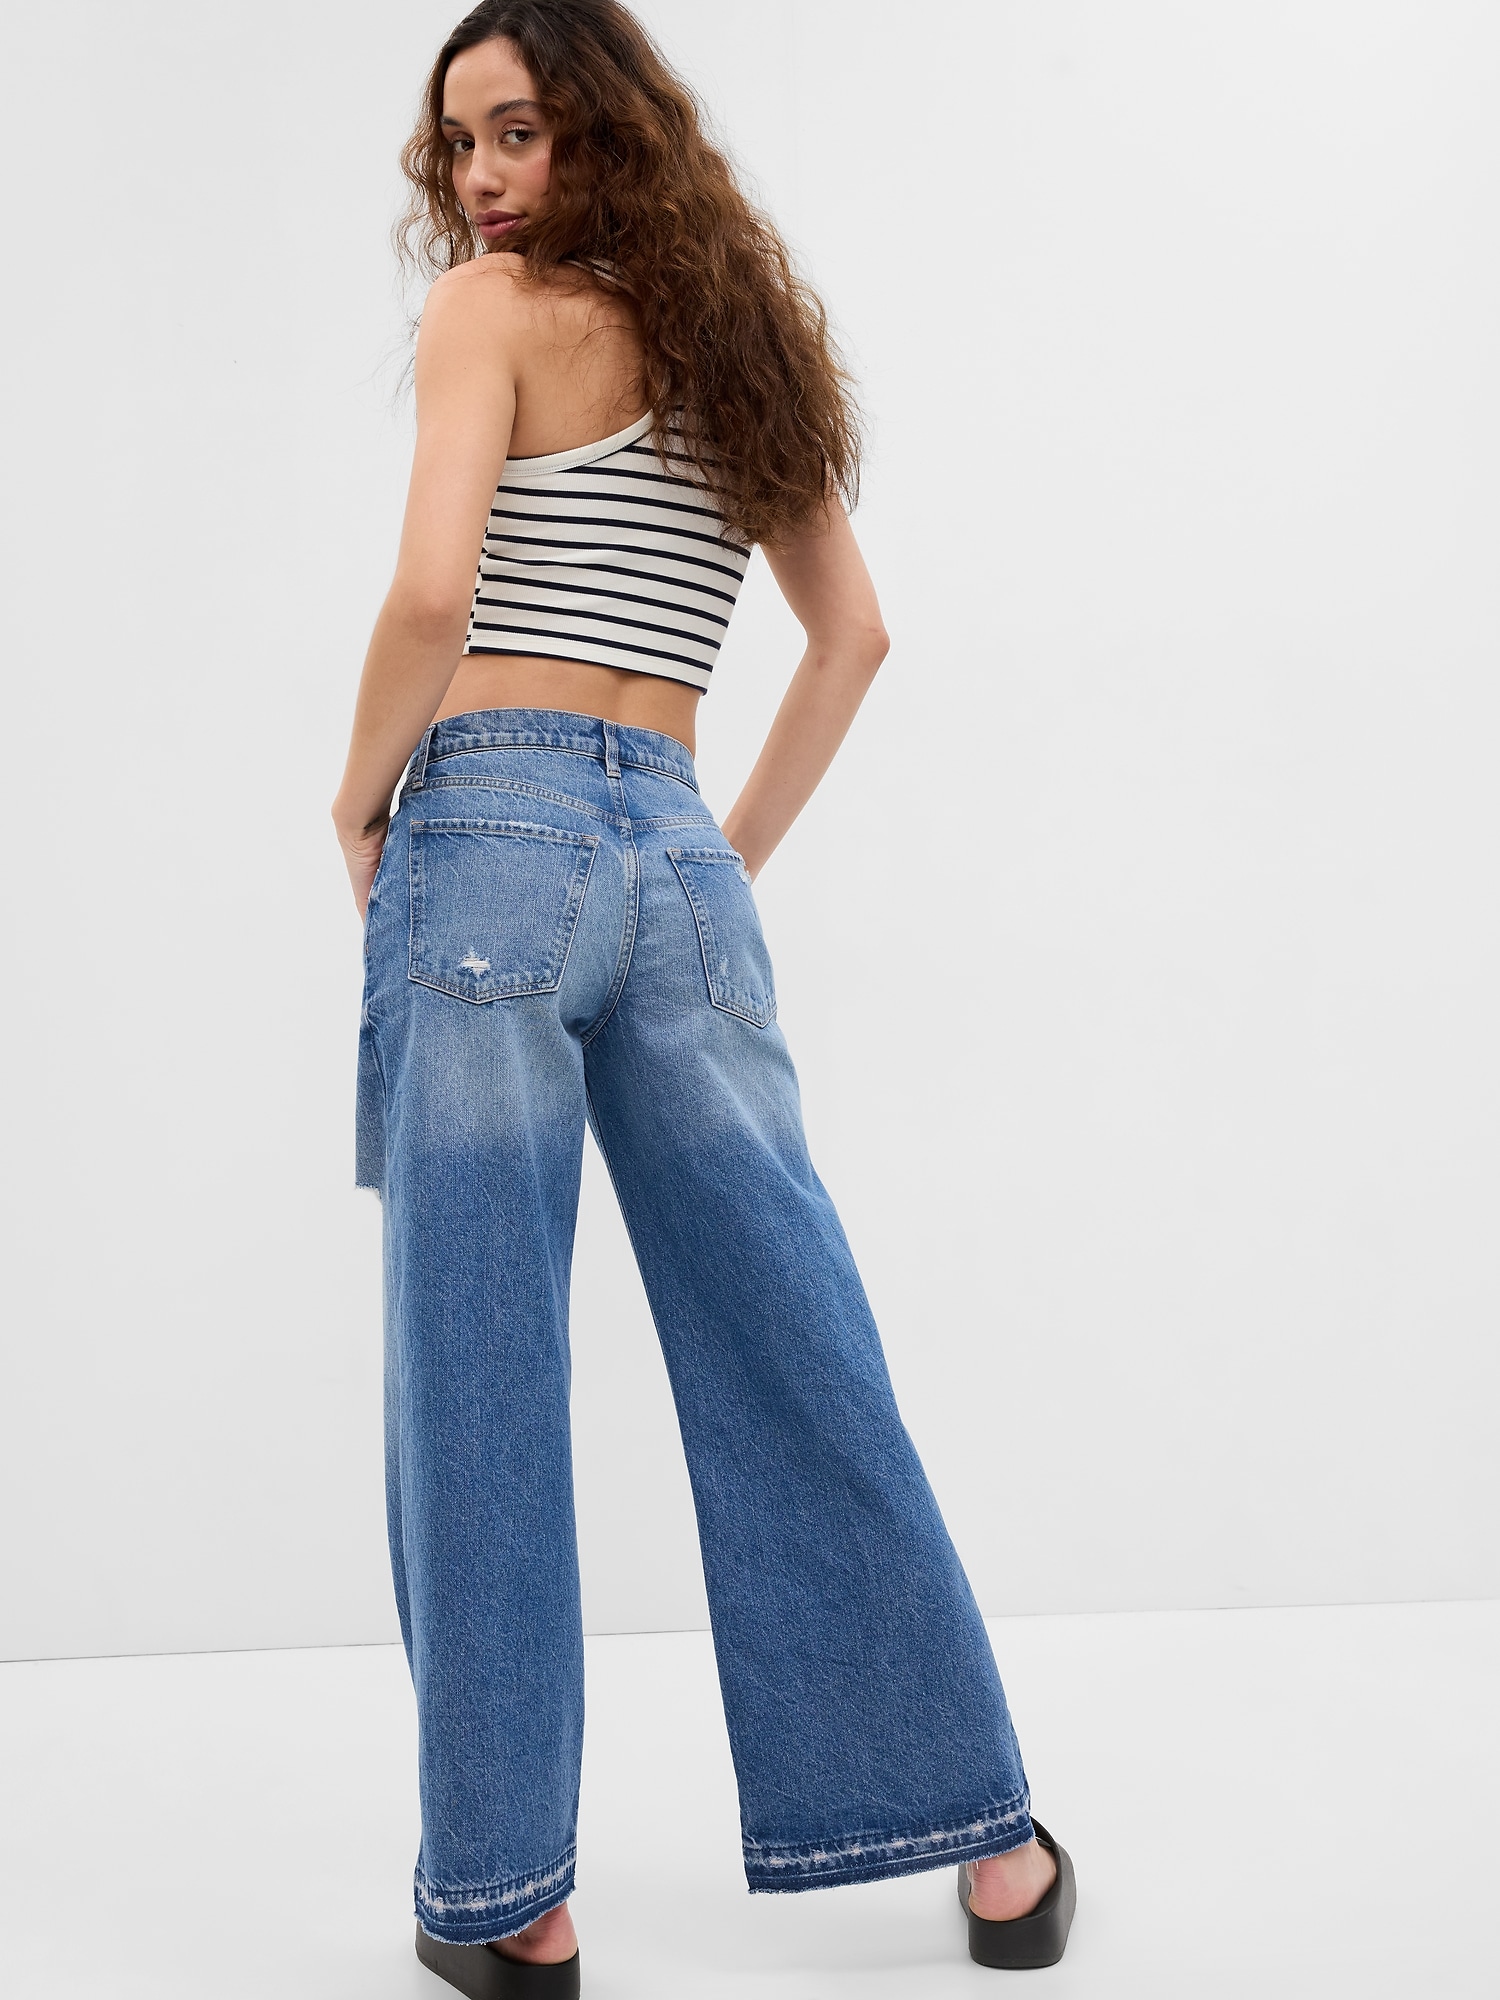 Gap size 30/10R *womens* Jeans – Jellybeansdress4less